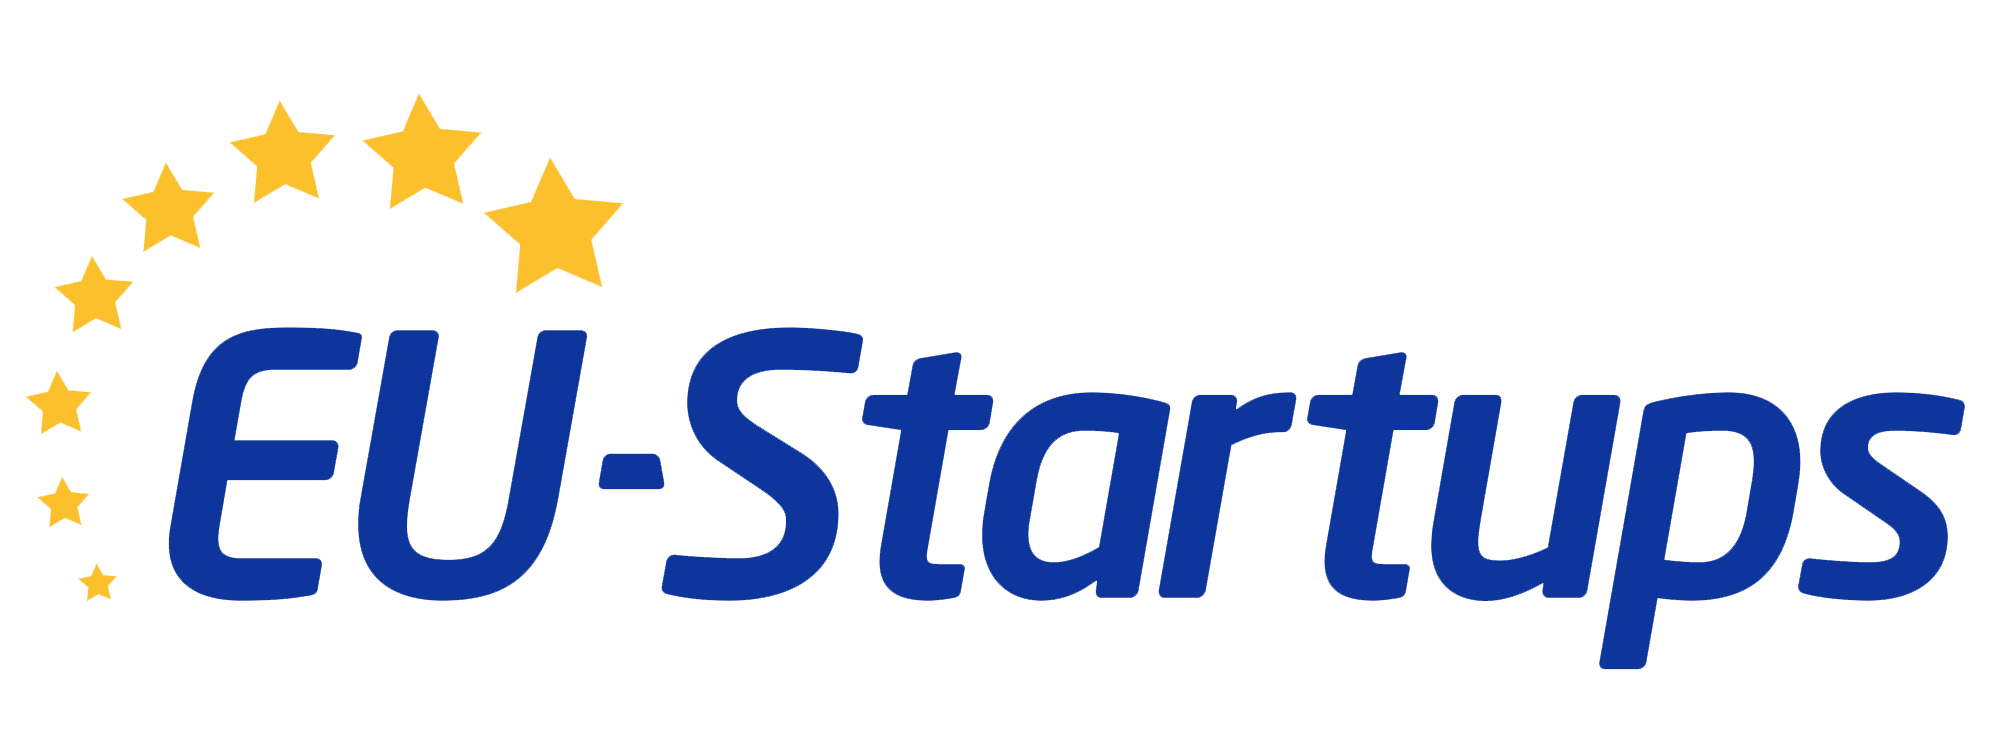 EU-Startups | Destaque para as startups europeias